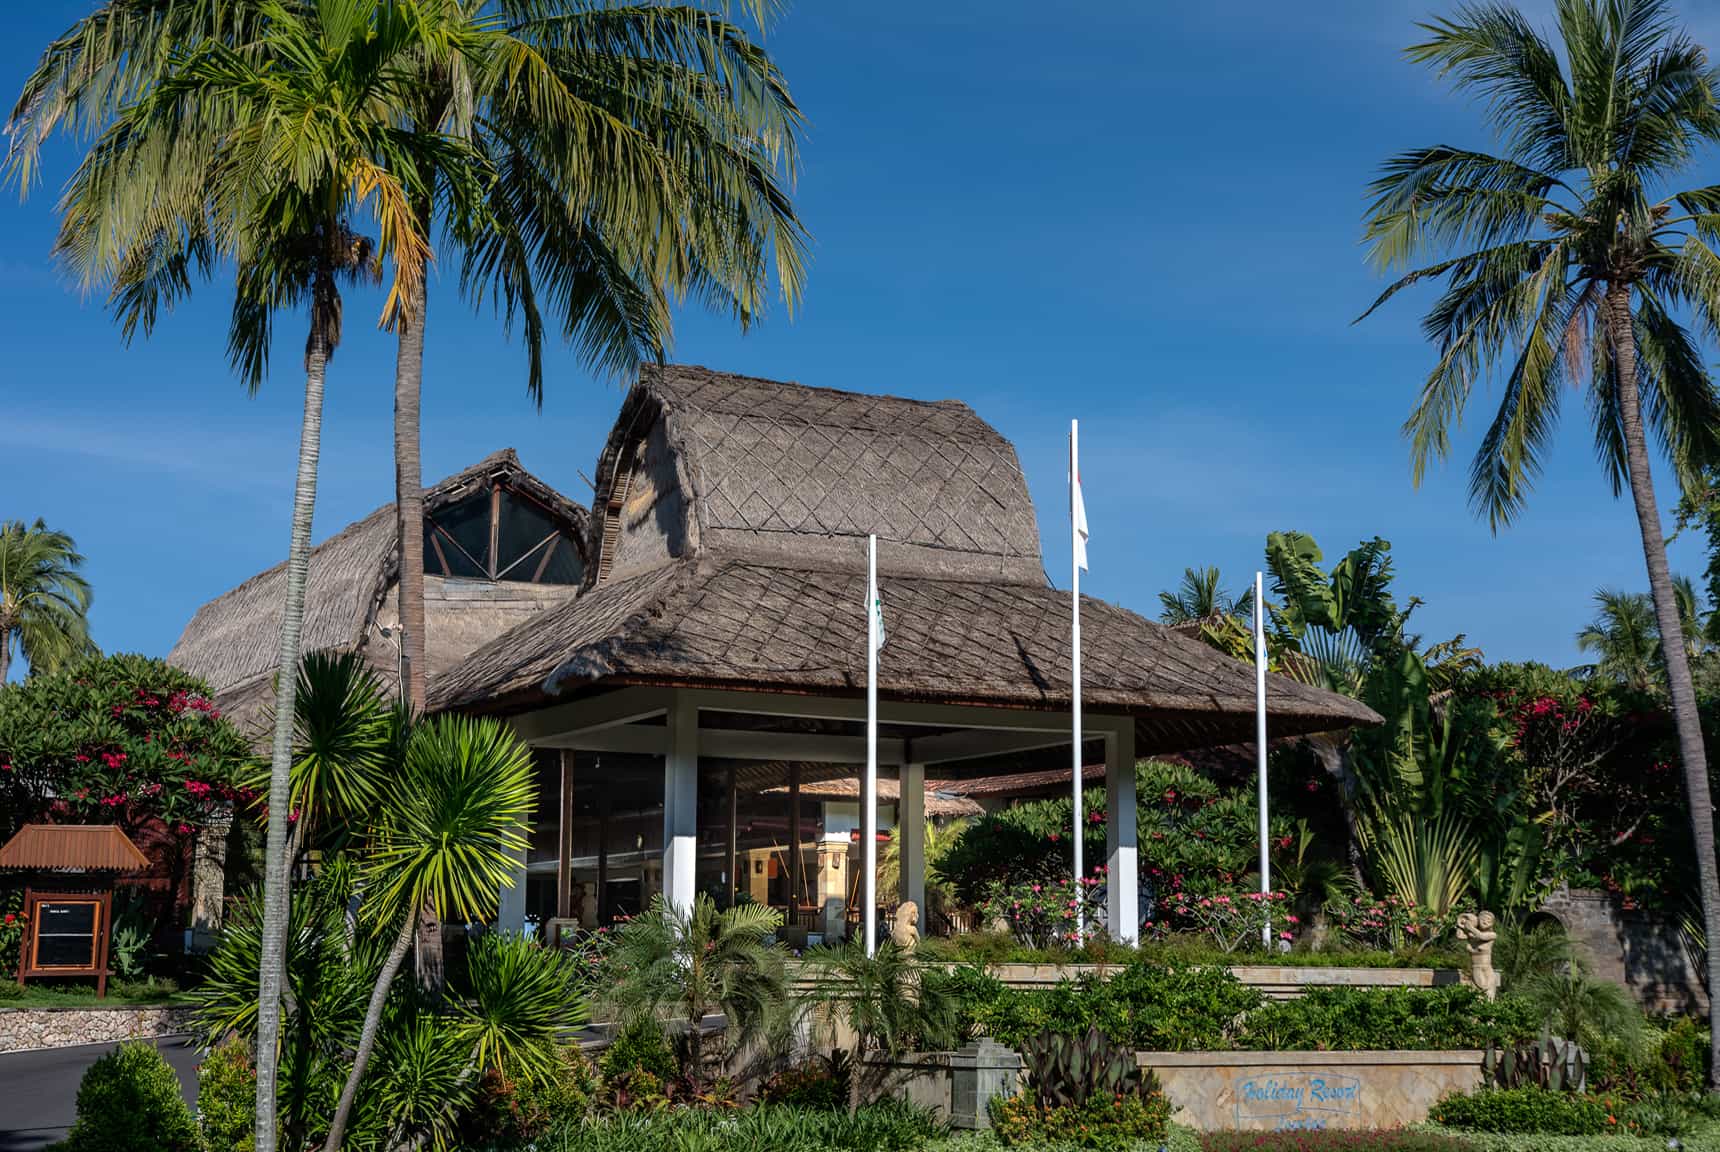 Holiday Resort - Mangsit, Lombok Indonesia (Bali hotel photography by master photographer Rick Carmichael of LuxViz)